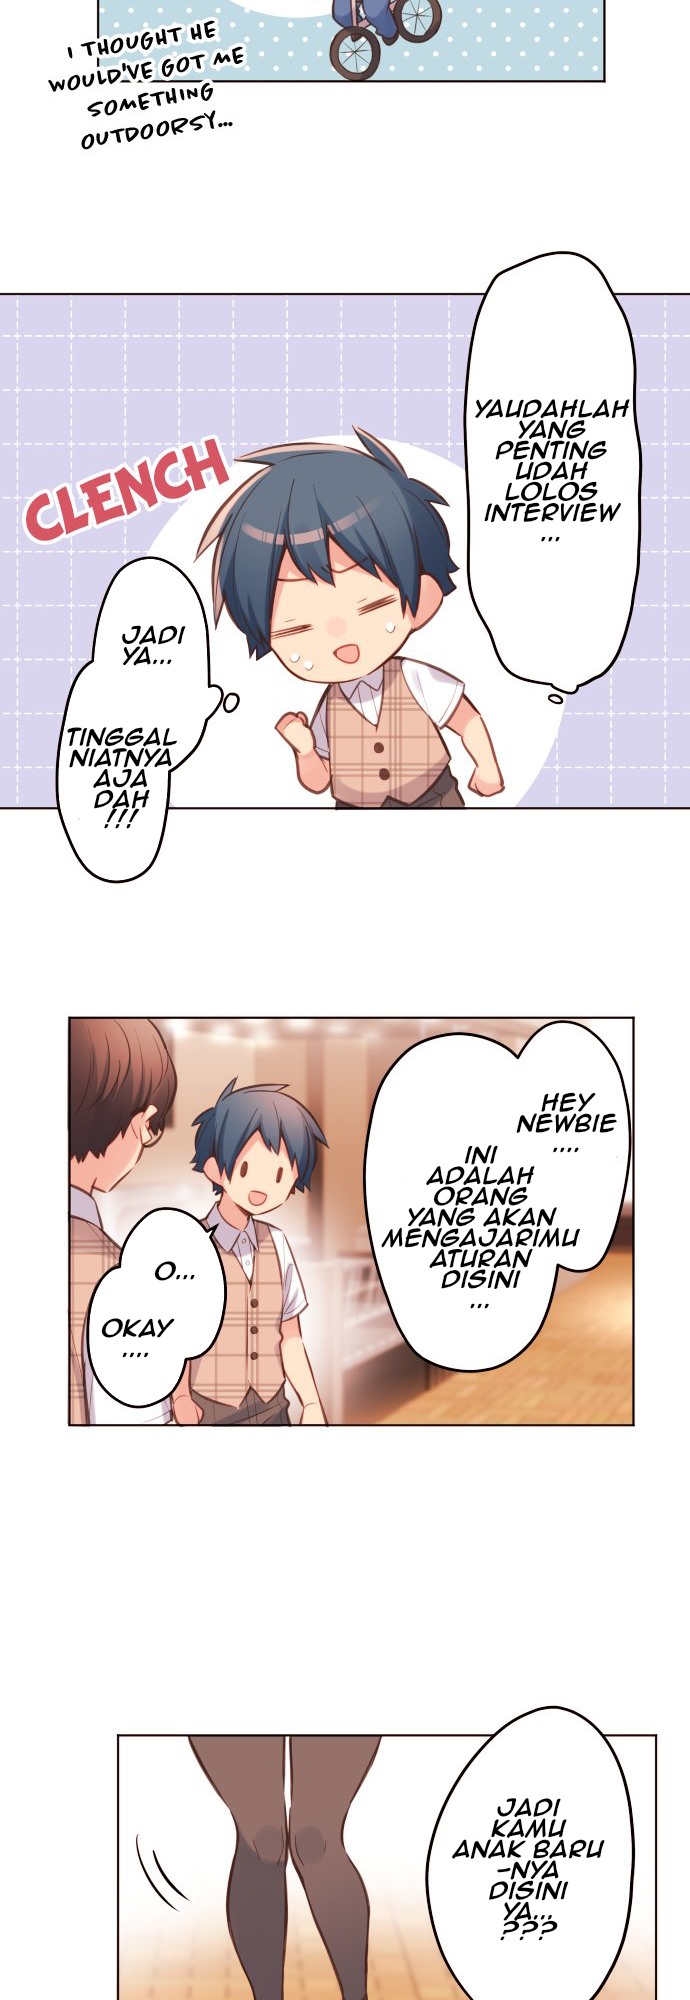 Waka-chan Is Flirty Again Chapter 31 26